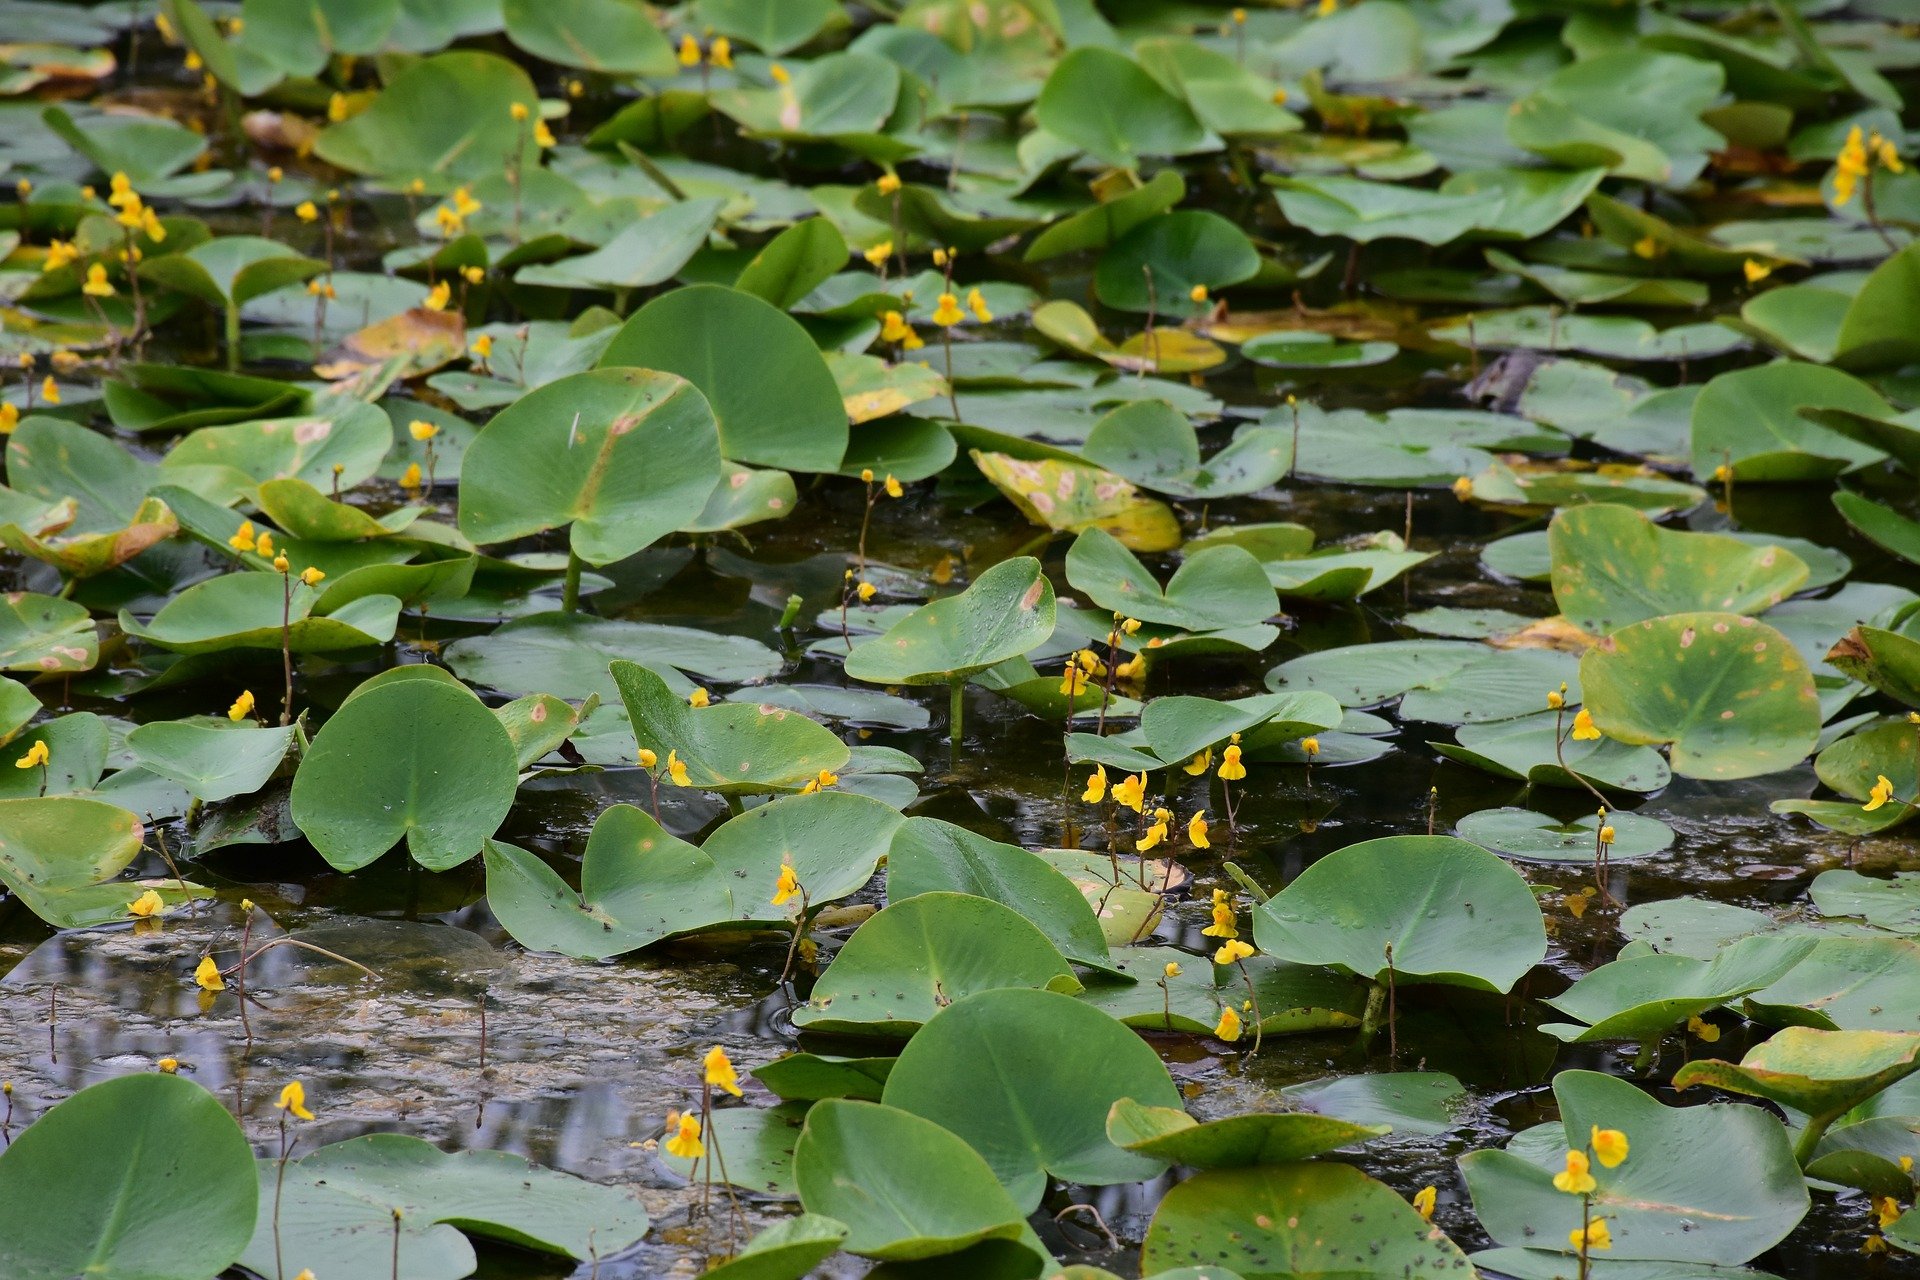 Bladderwort flowers among wetland greenery